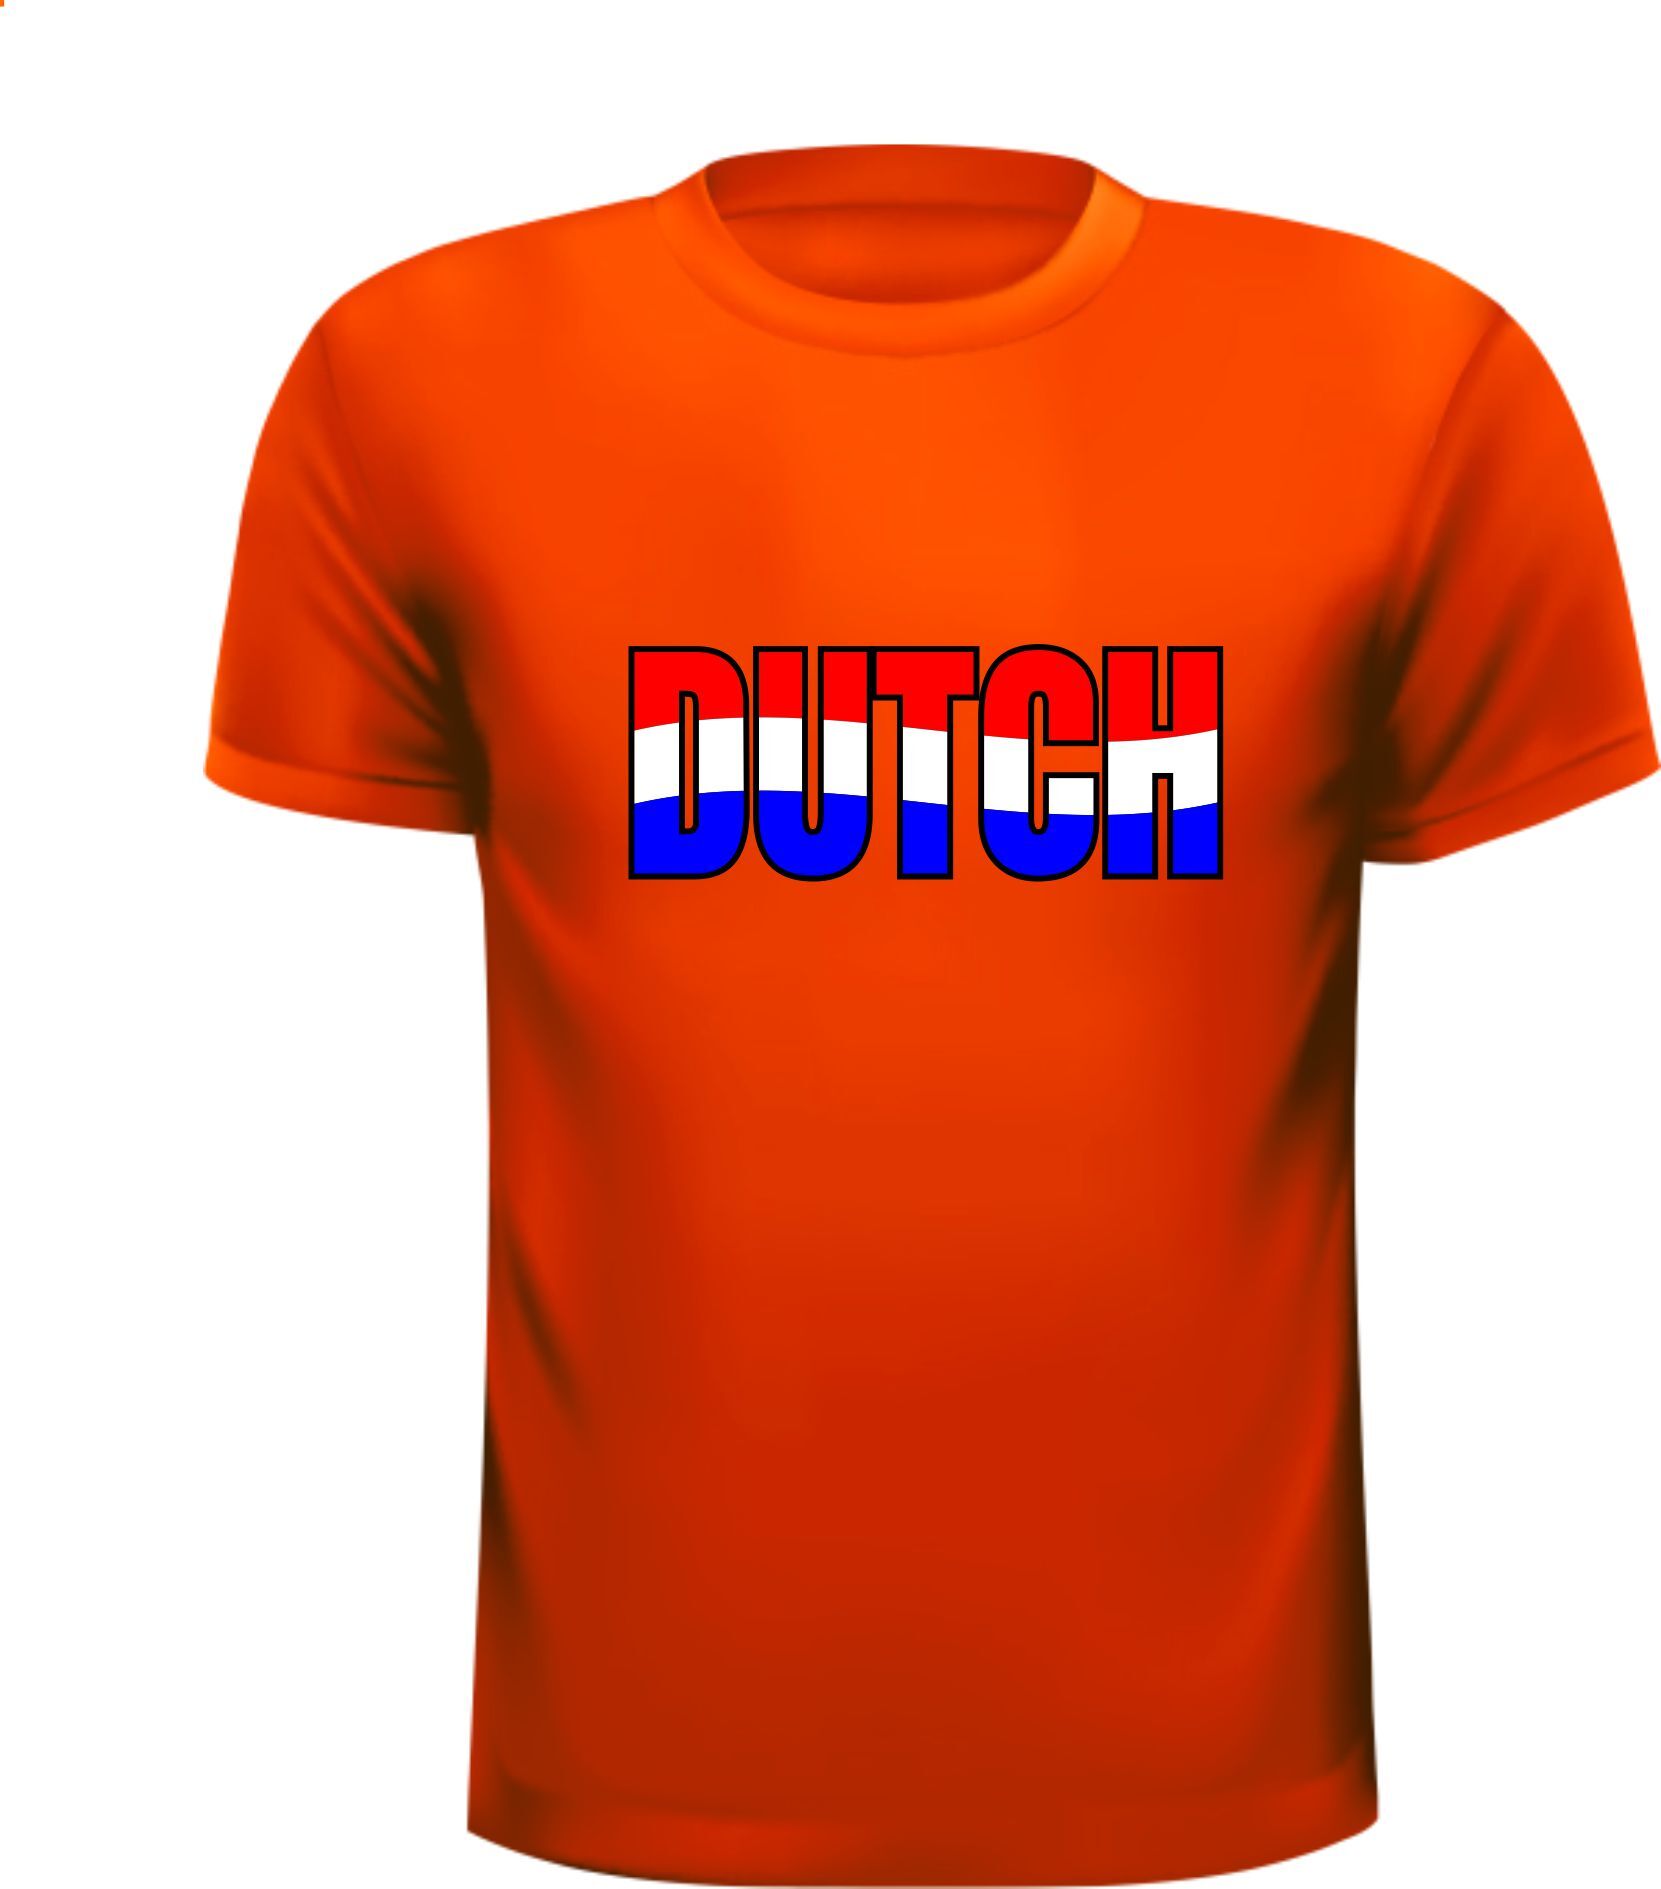 Oranje shirtje met opdruk Dutch